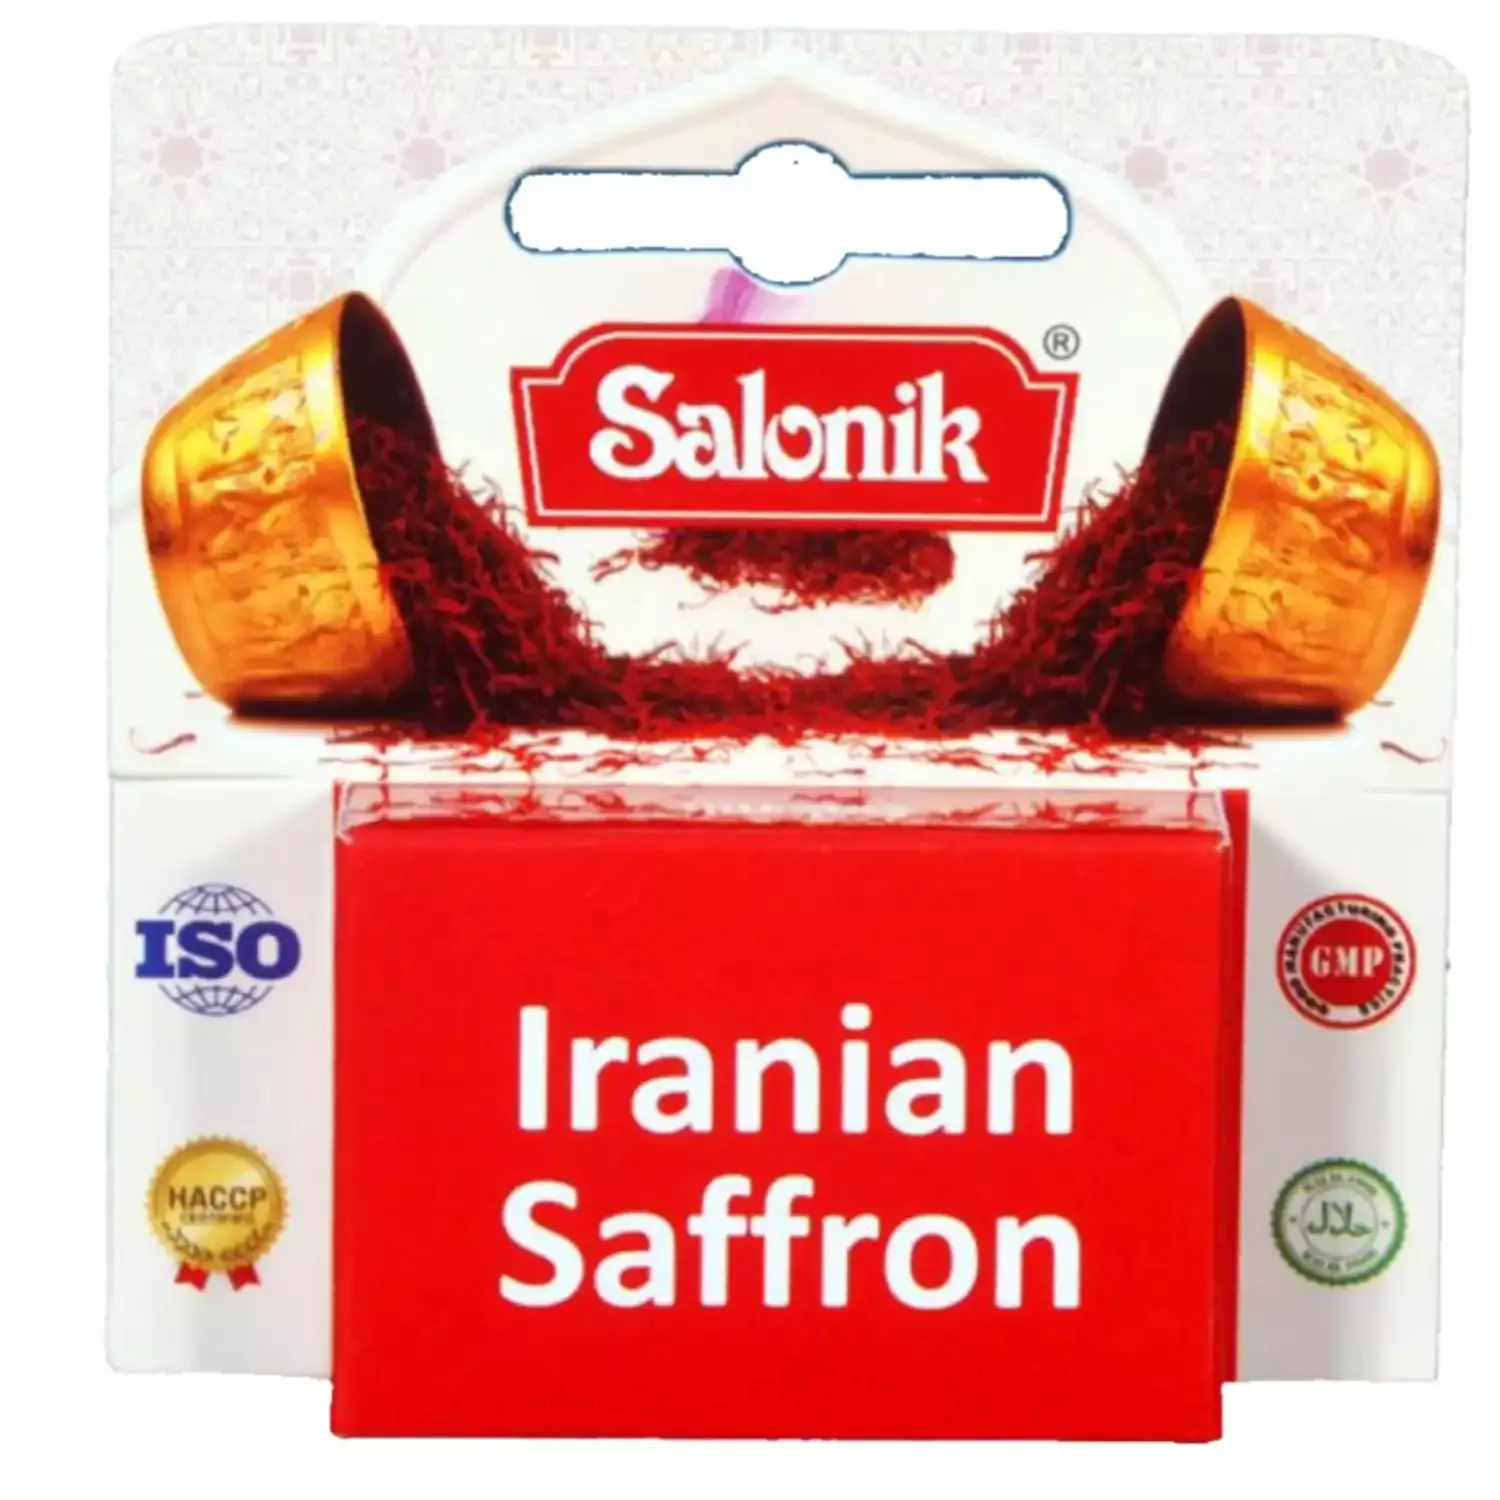 Salonik Iranian Saffron  Standard Quality  1g ISO Certified A1++ Grade1 Original Kesar 1 Gram